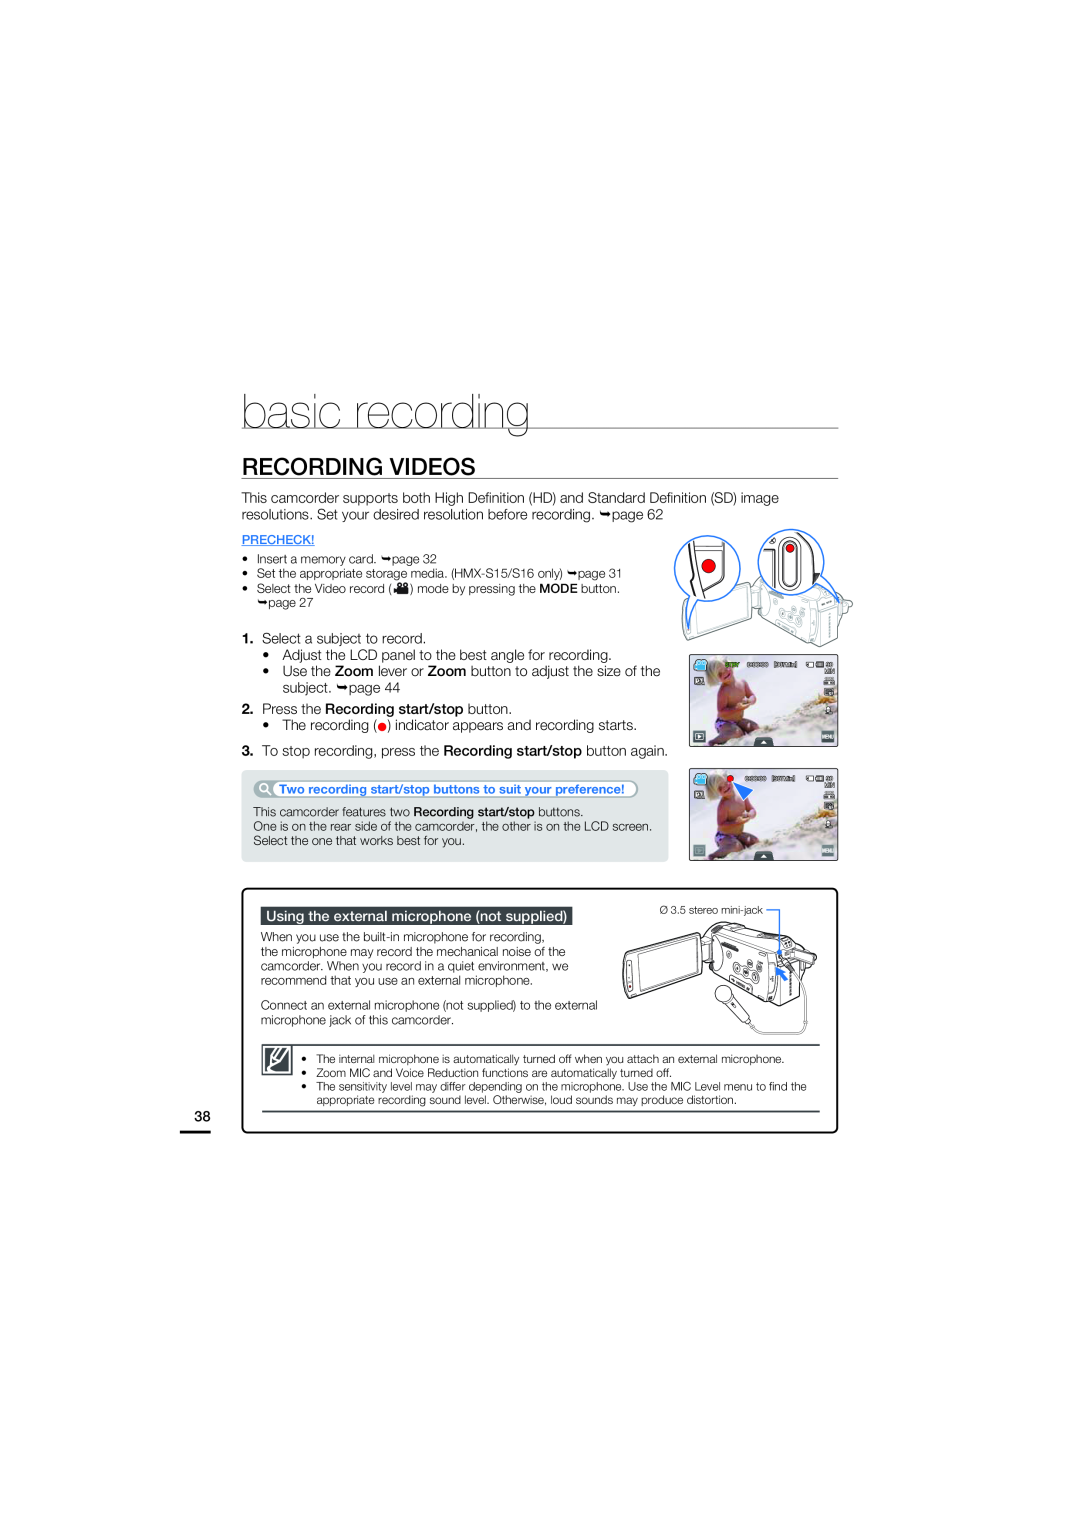 Samsung HMX-S15BN/XAA manual basic recording, Recording Videos, Using the external microphone not supplied, Precheck 